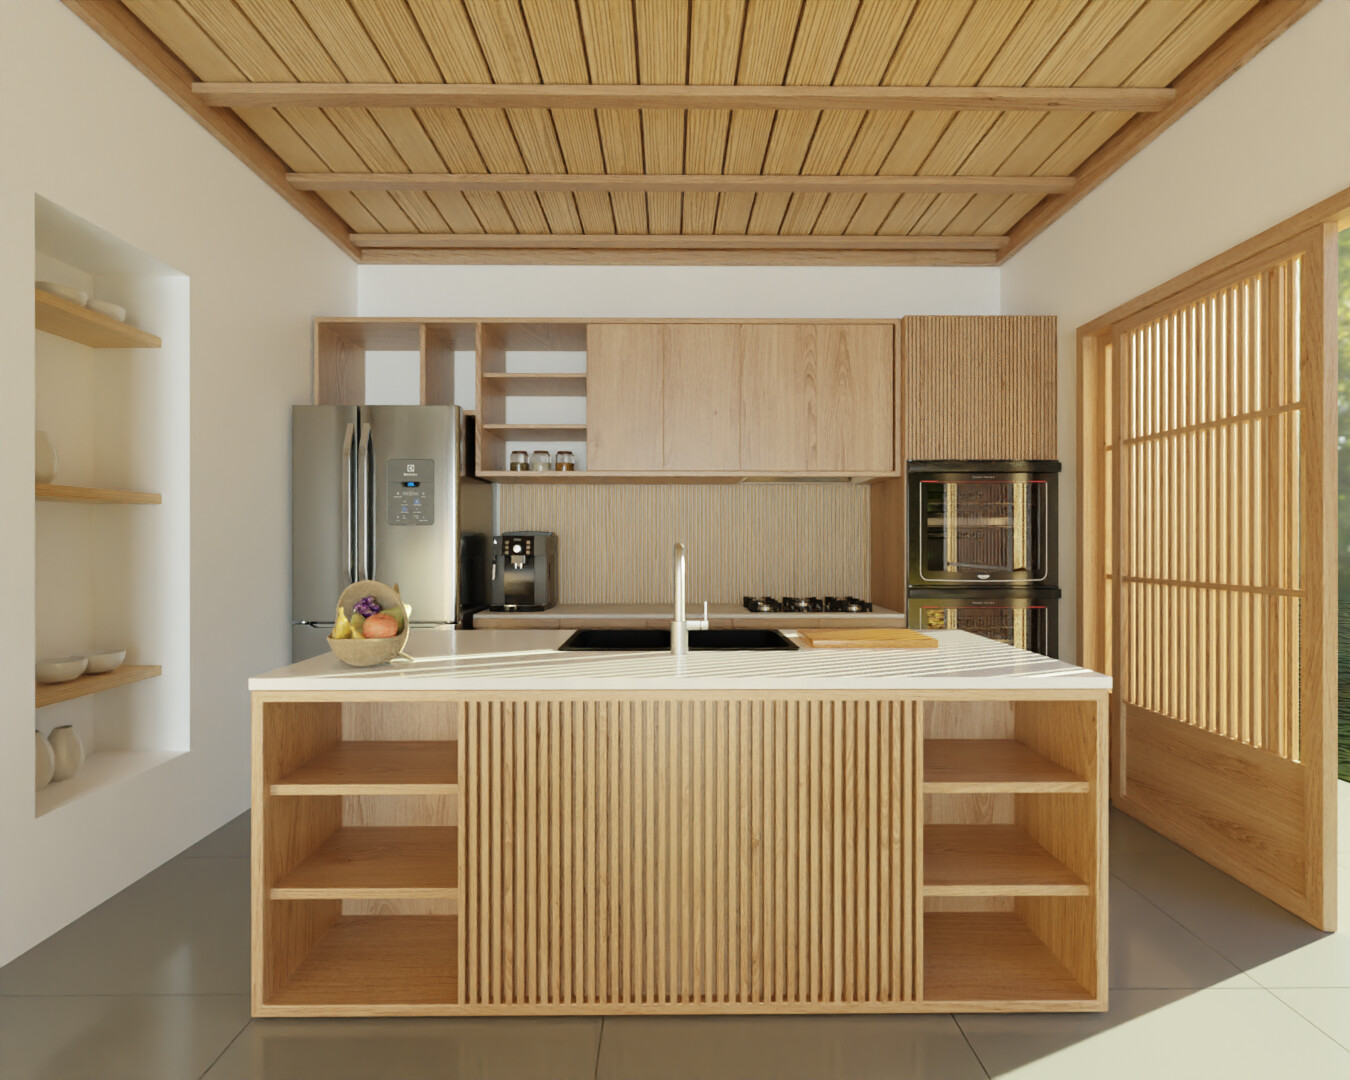 ArtStation - sweet japanese kitchen design